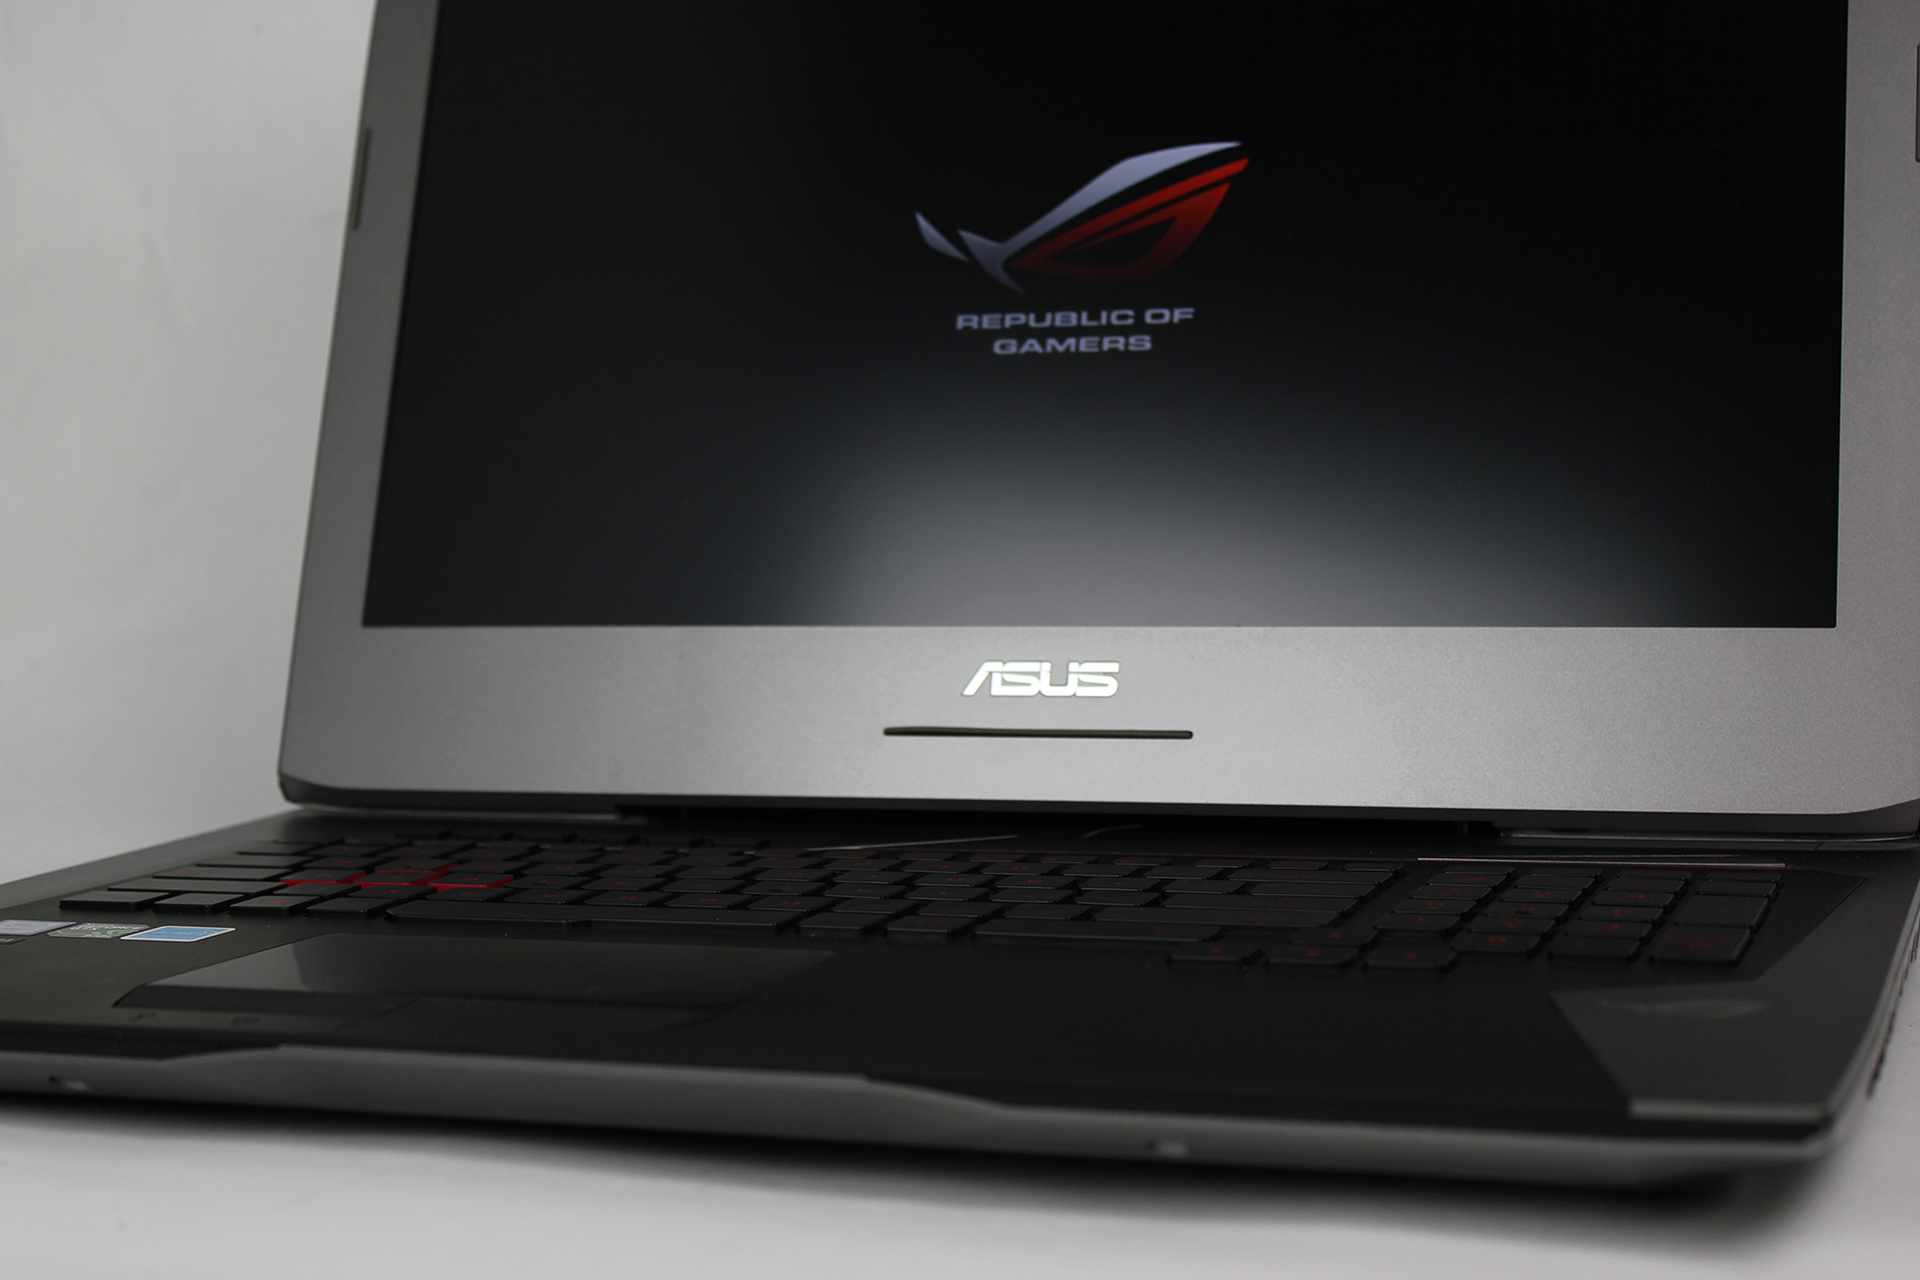 Asus Rog G752Vt-Dh72 (Laptop) Review 1